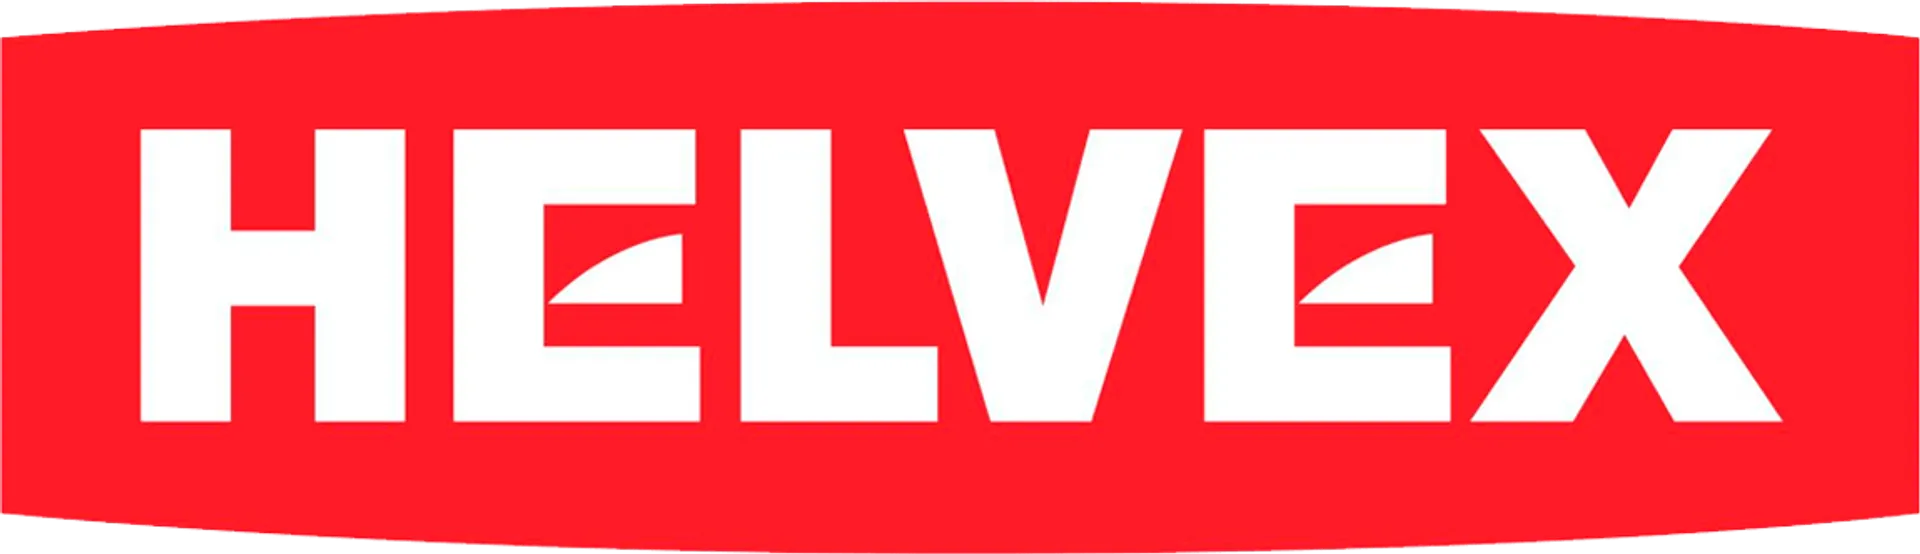 HELVEX logo